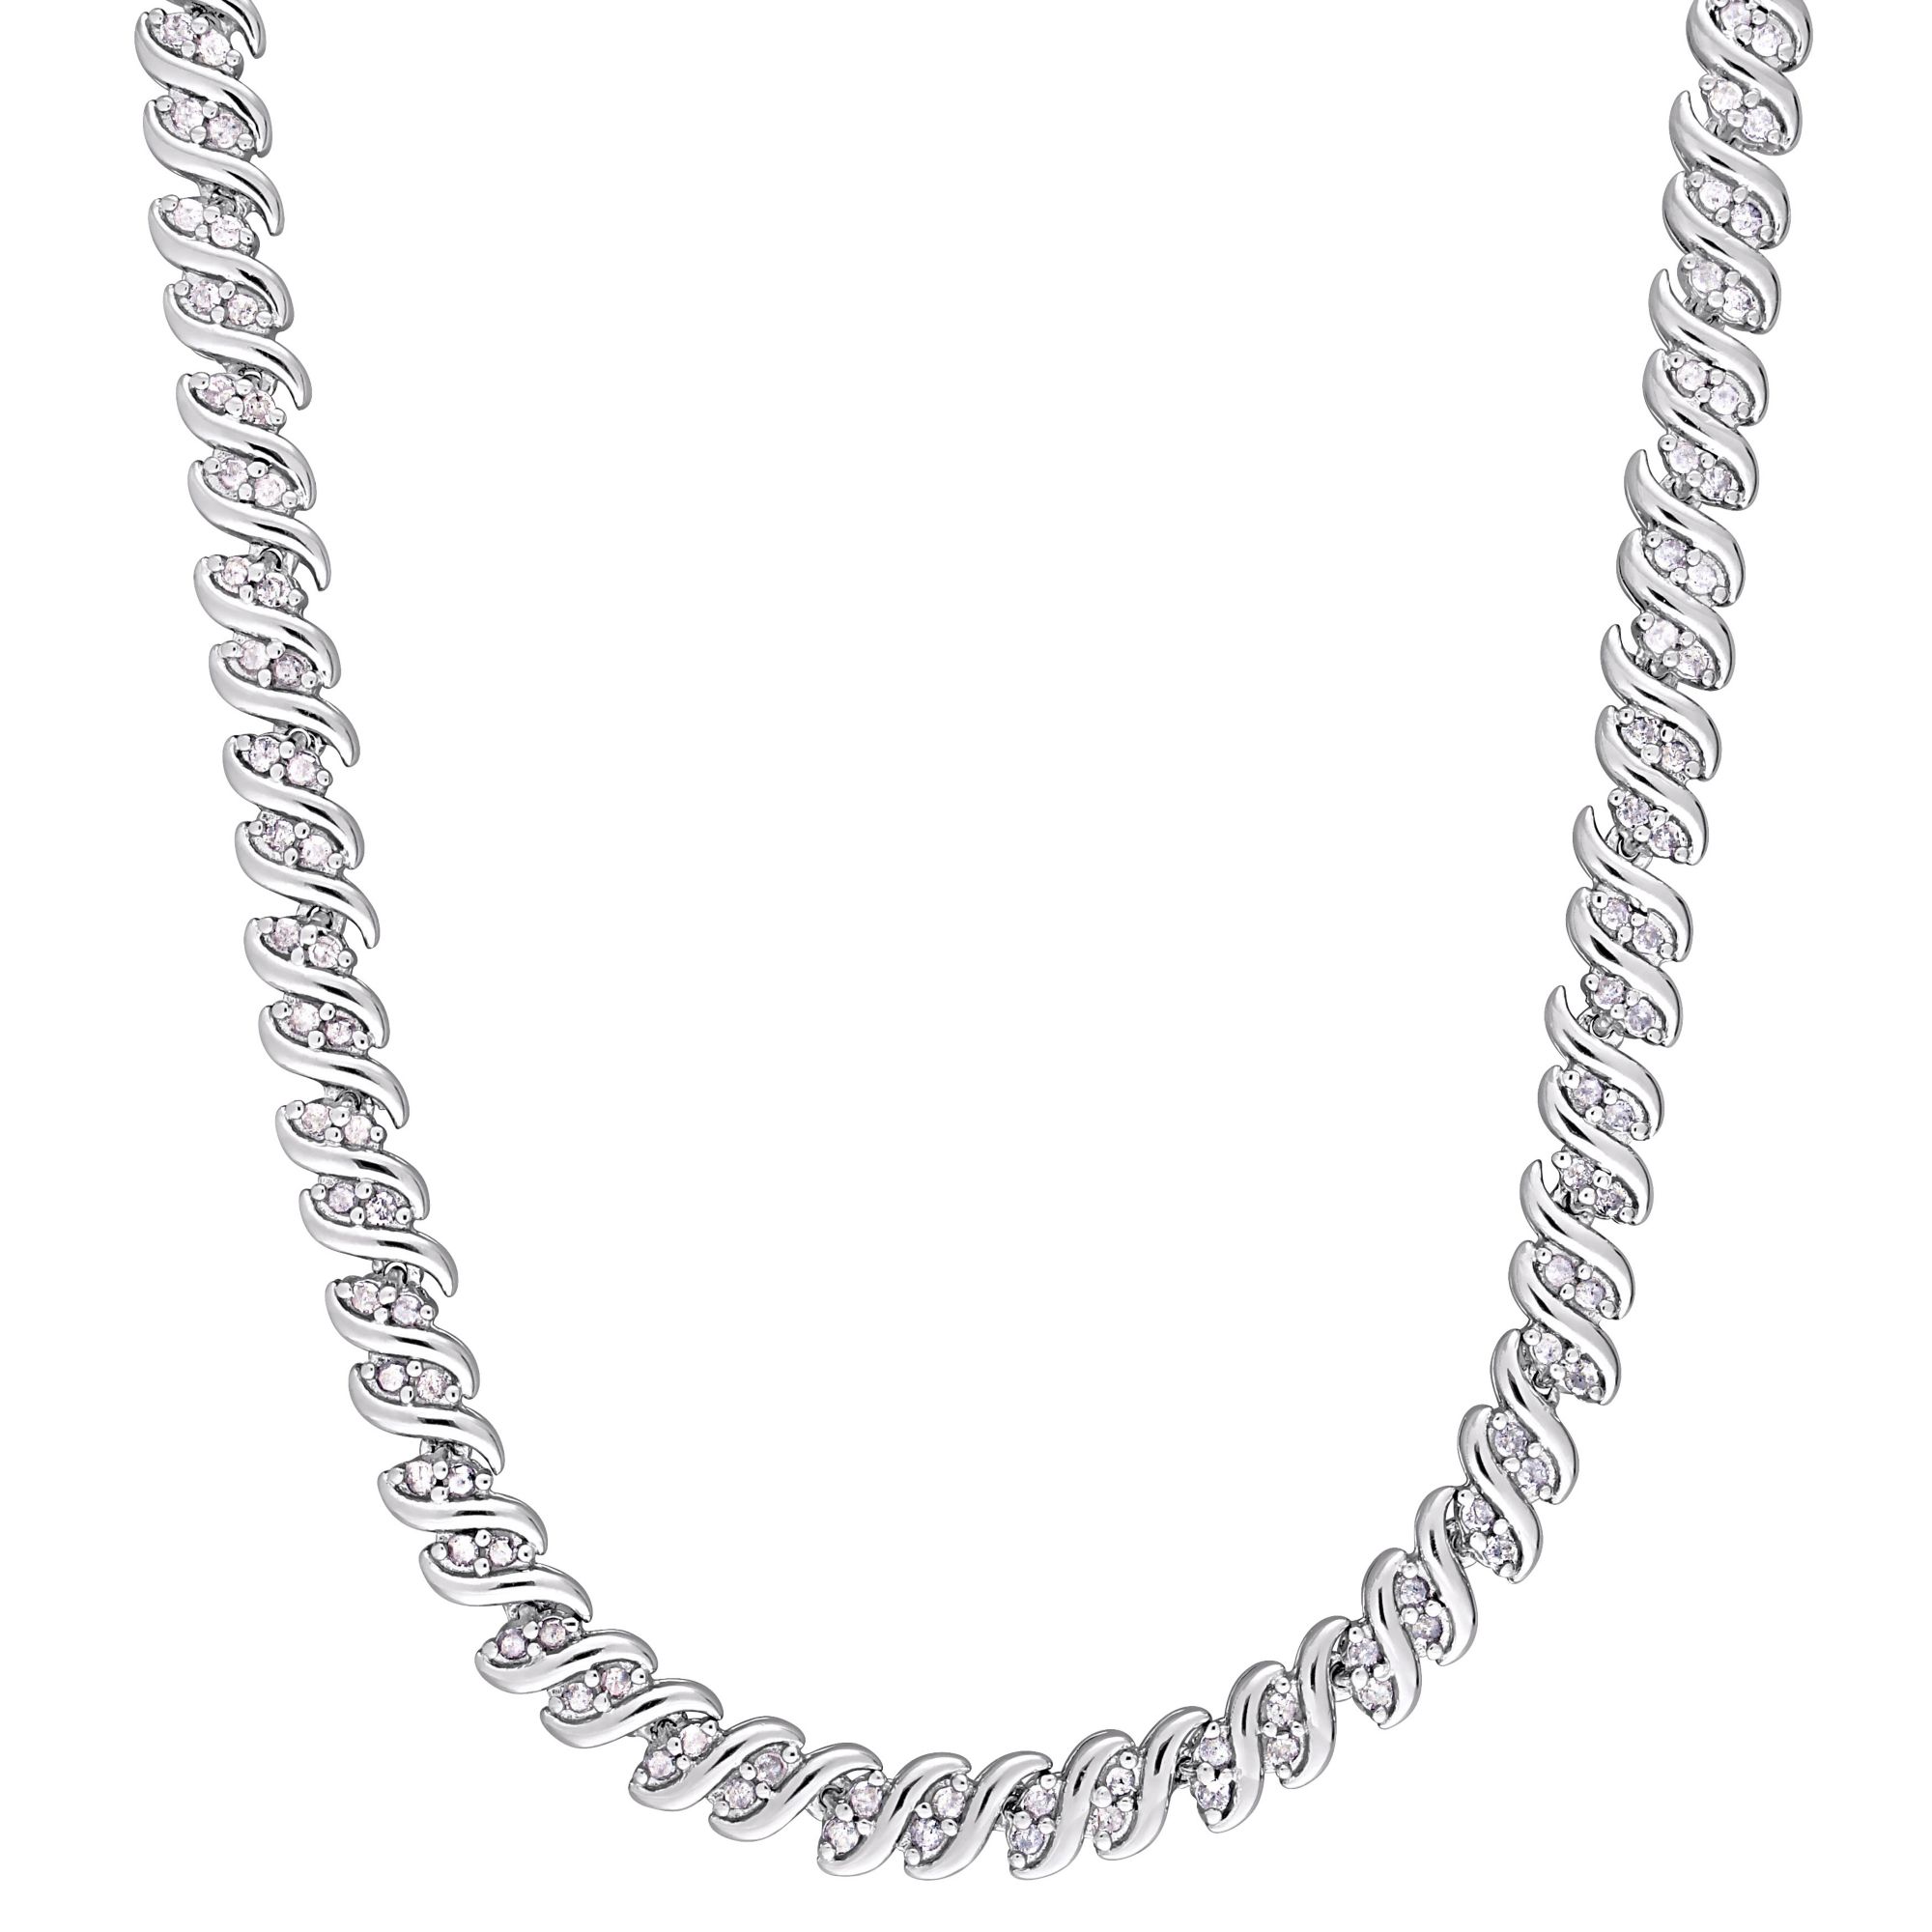 2 ct. t.w. Diamond Twist Tennis Necklace in Sterling Silver